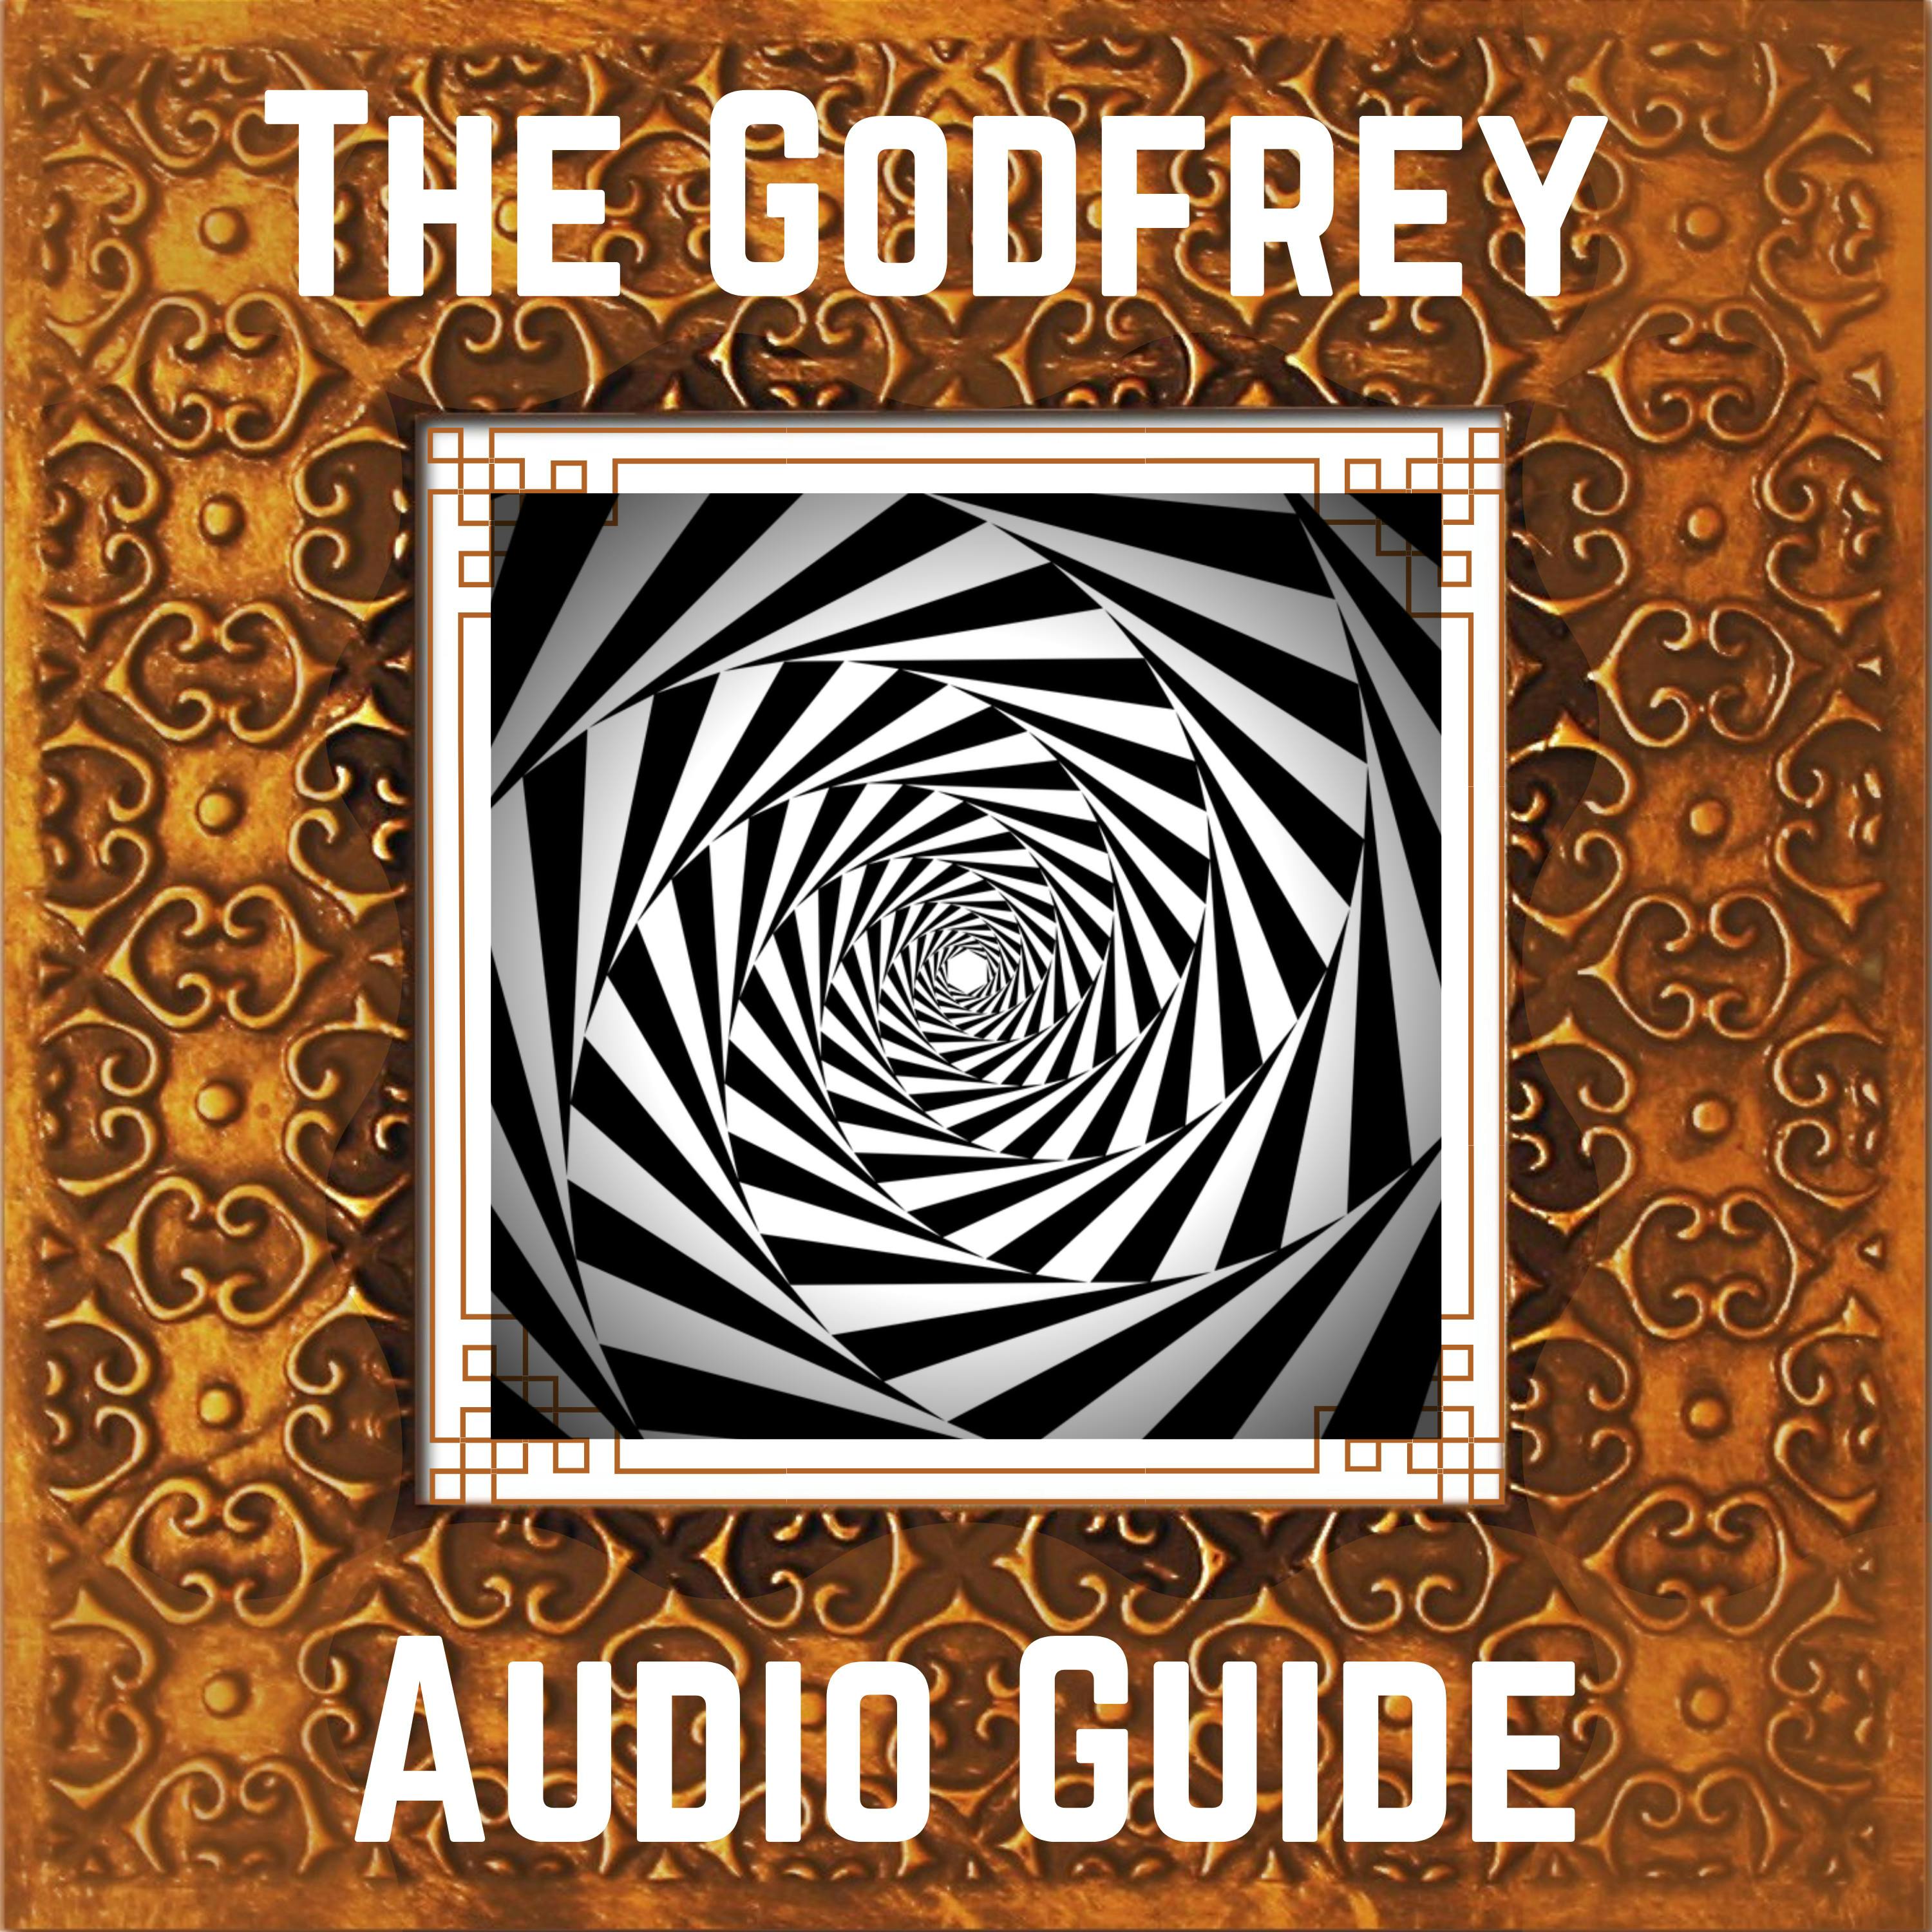 The Godfrey Audio Guide (Creator Showcase- November 11, 2020)